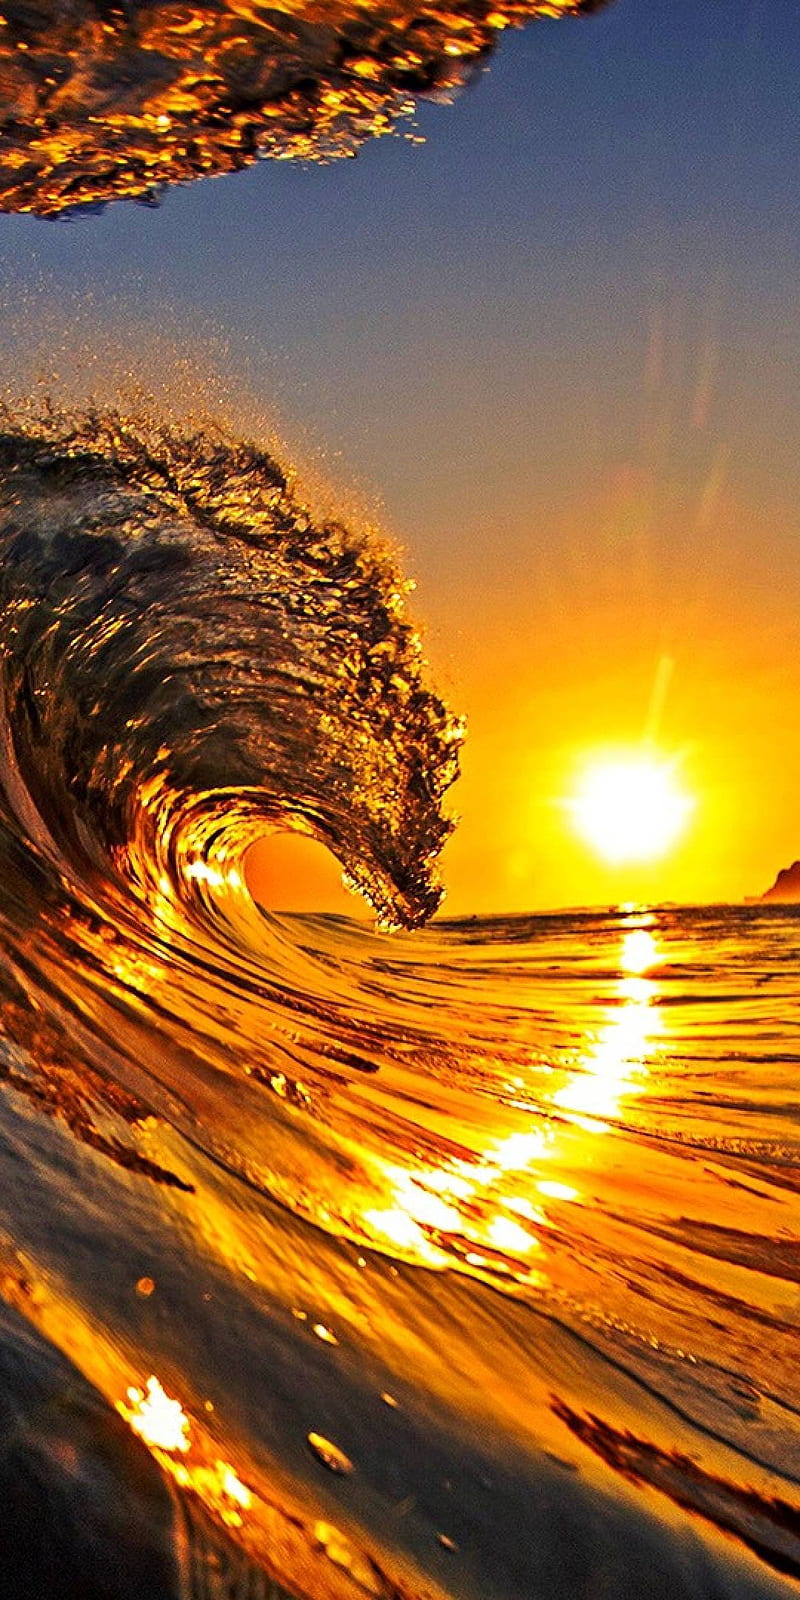 Wave Sunset Pictures  Download Free Images on Unsplash